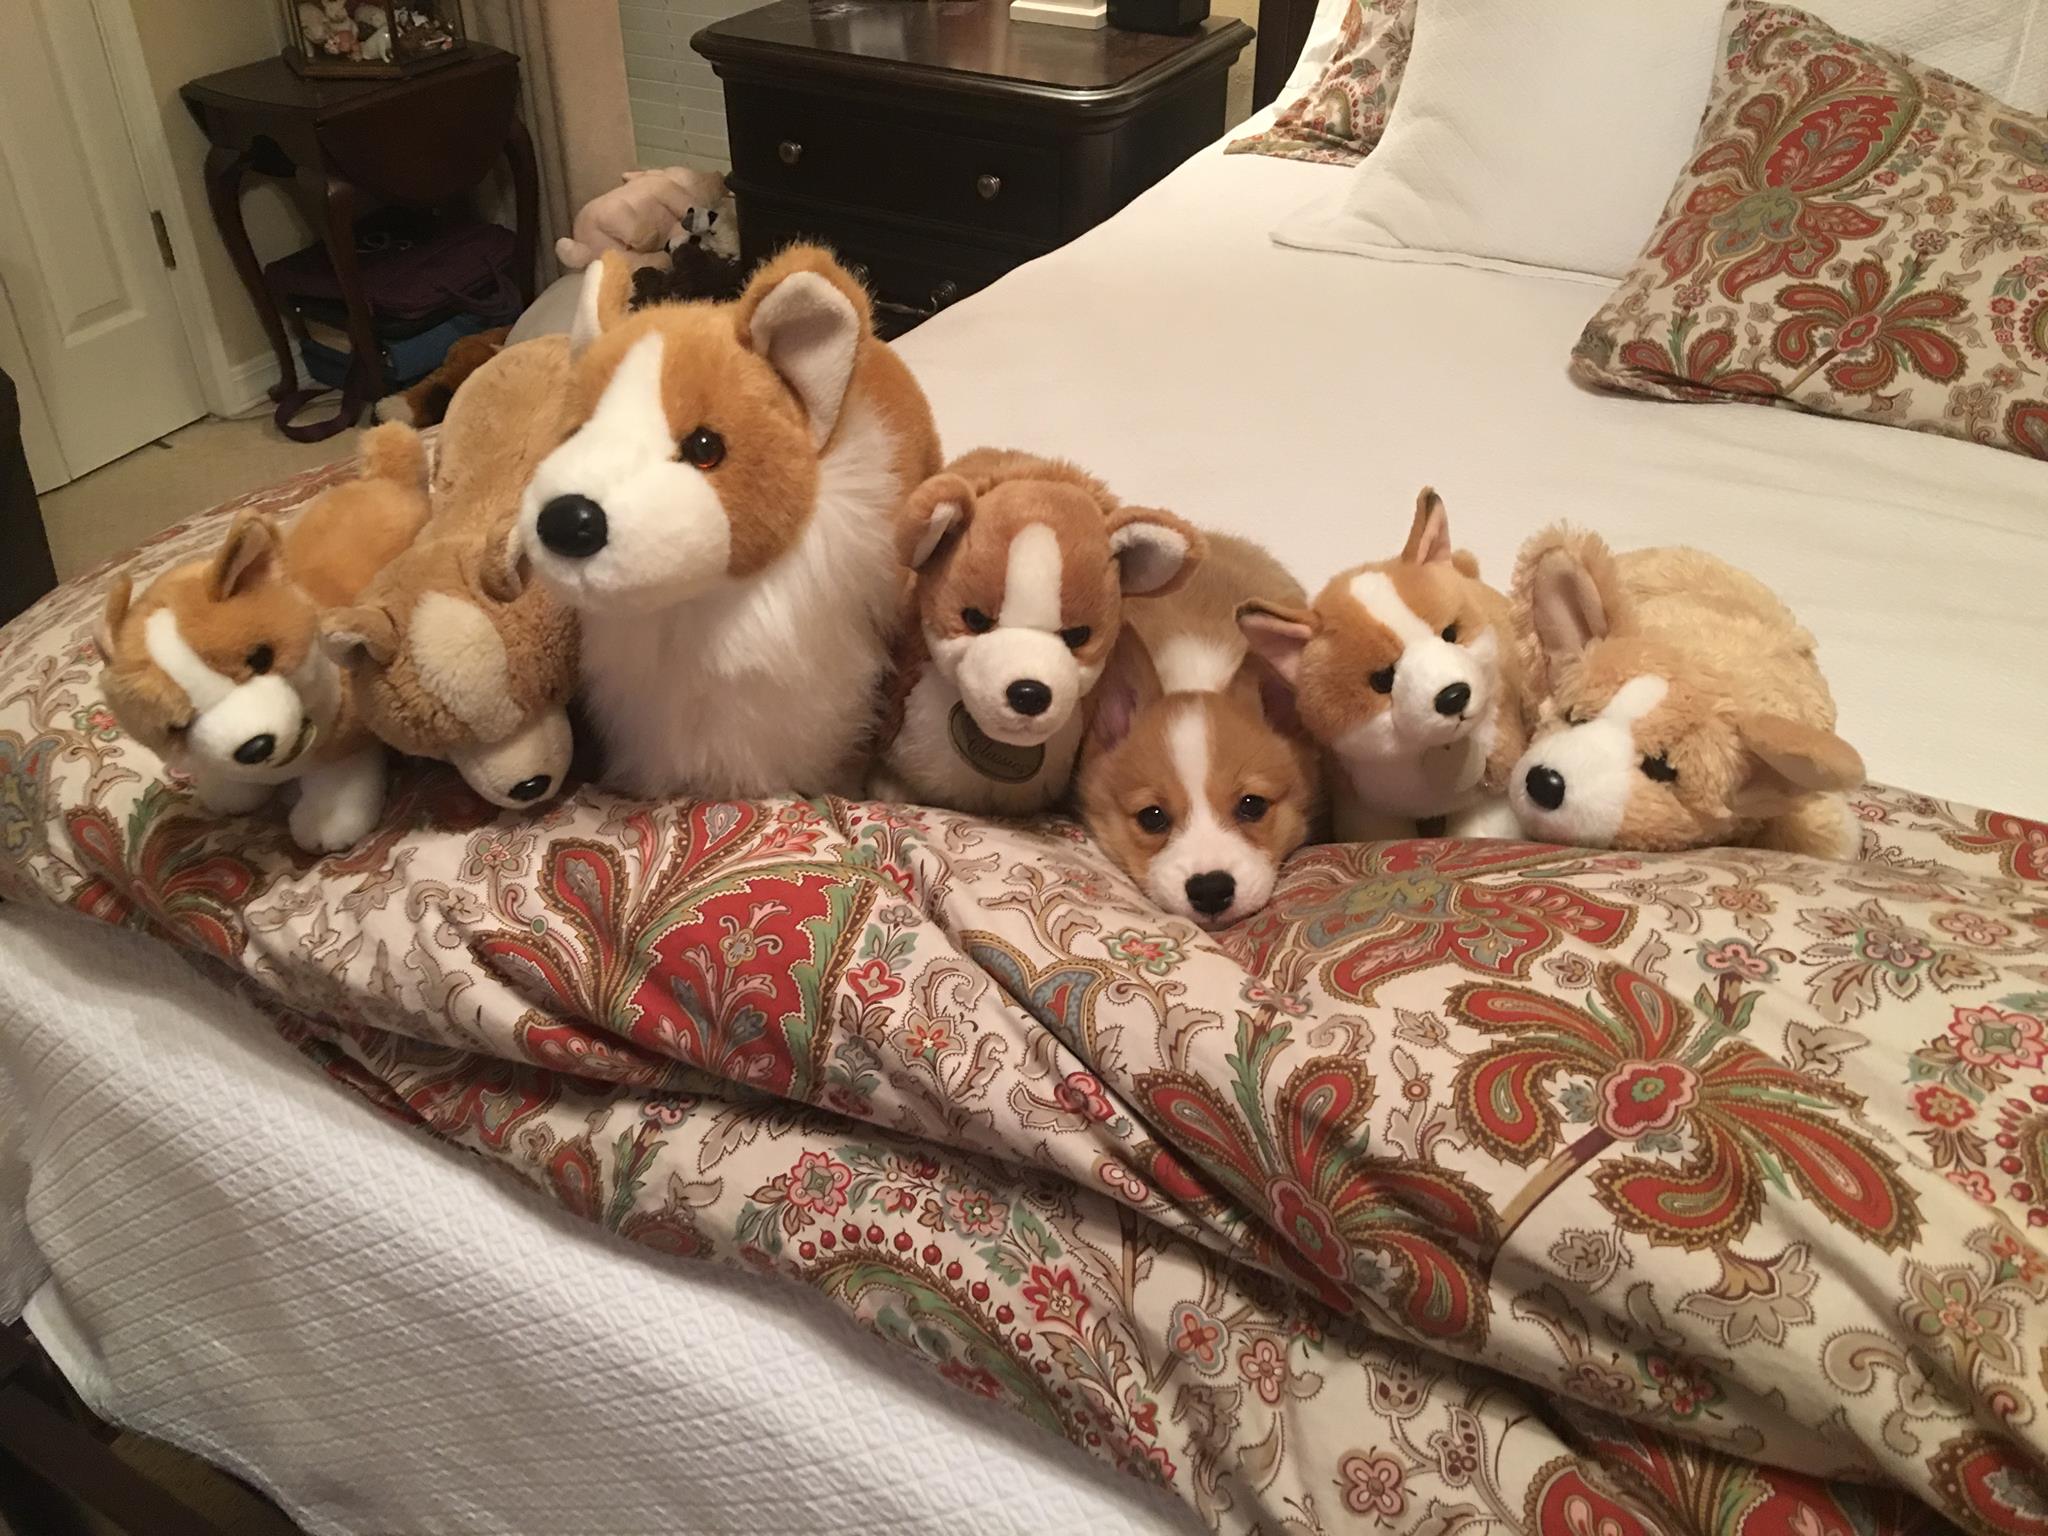 A Corgi lying on the bed together with corgi stuffed toys